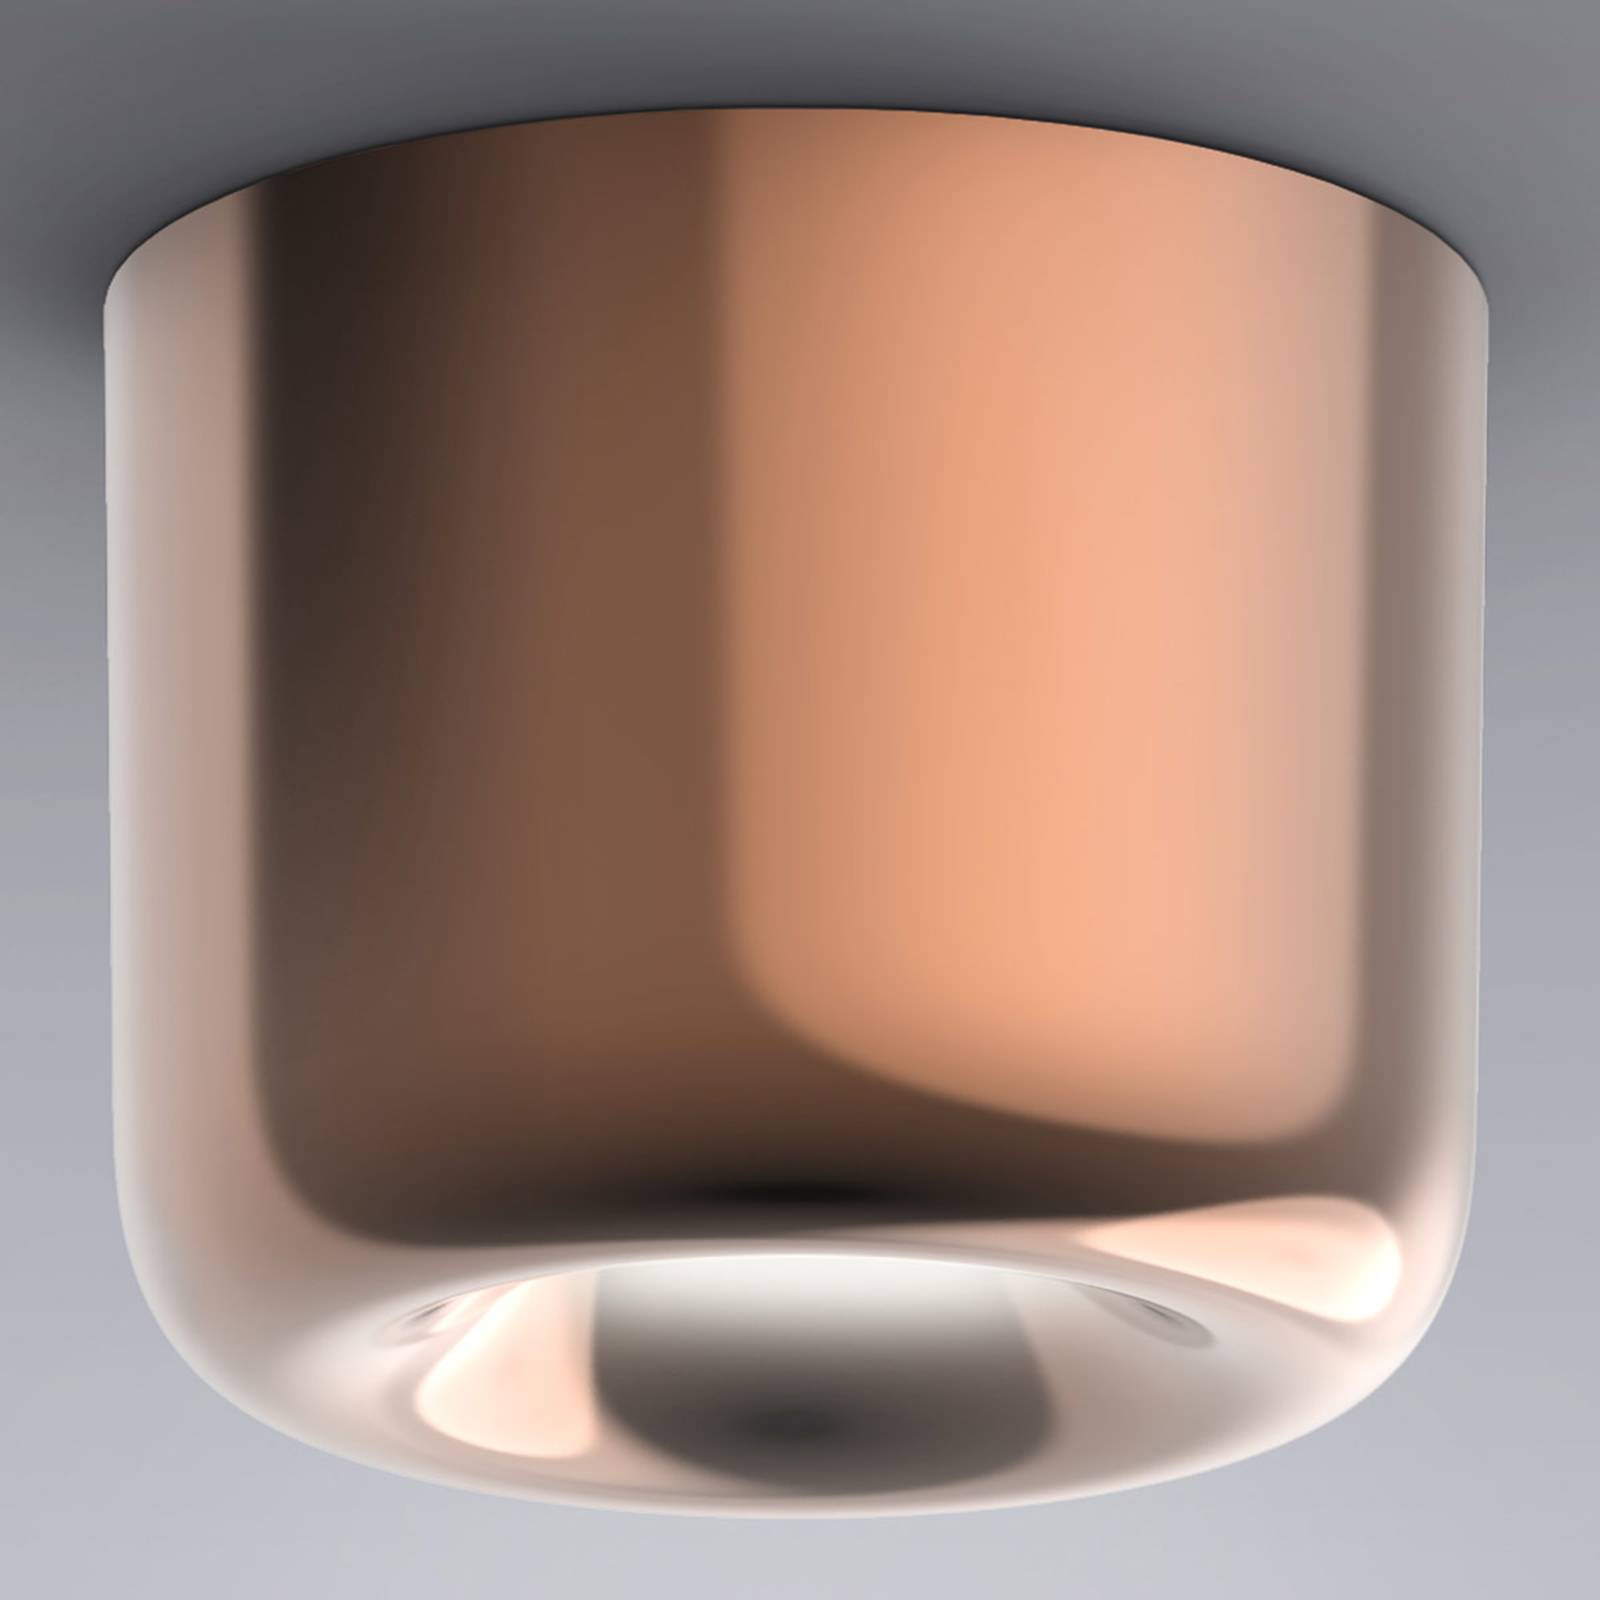 Image of Serien Lighting serien.lighting Cavity Ceiling L, bronze 4260548460735